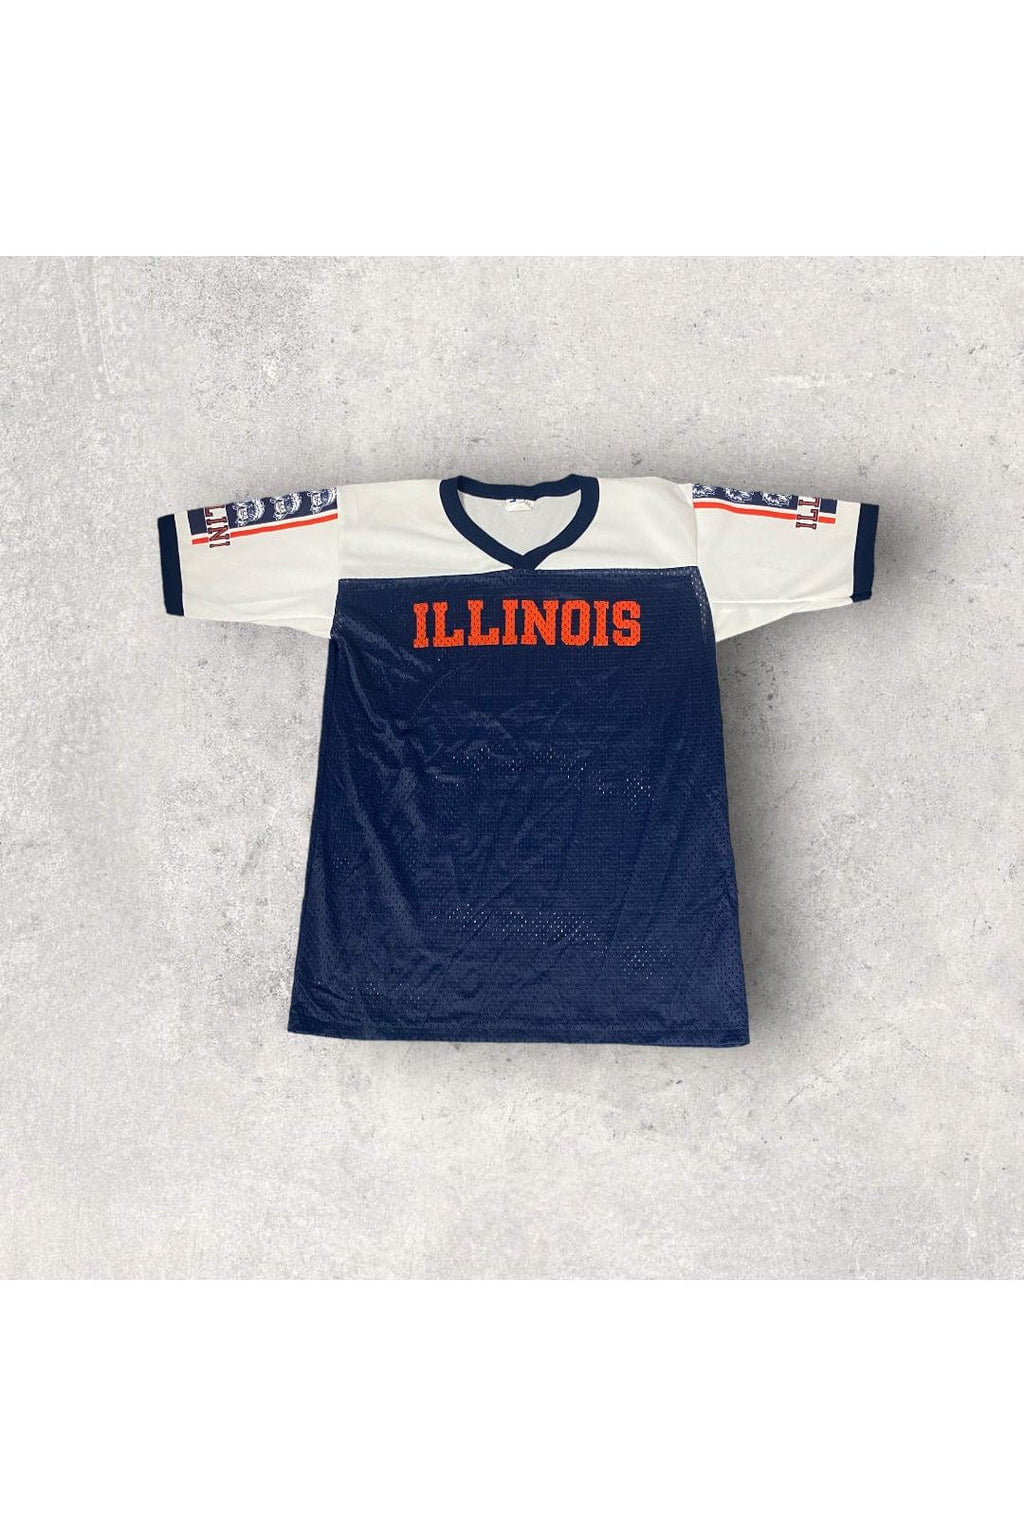 Vintage 1st String University of Illinois Football Jersey- L